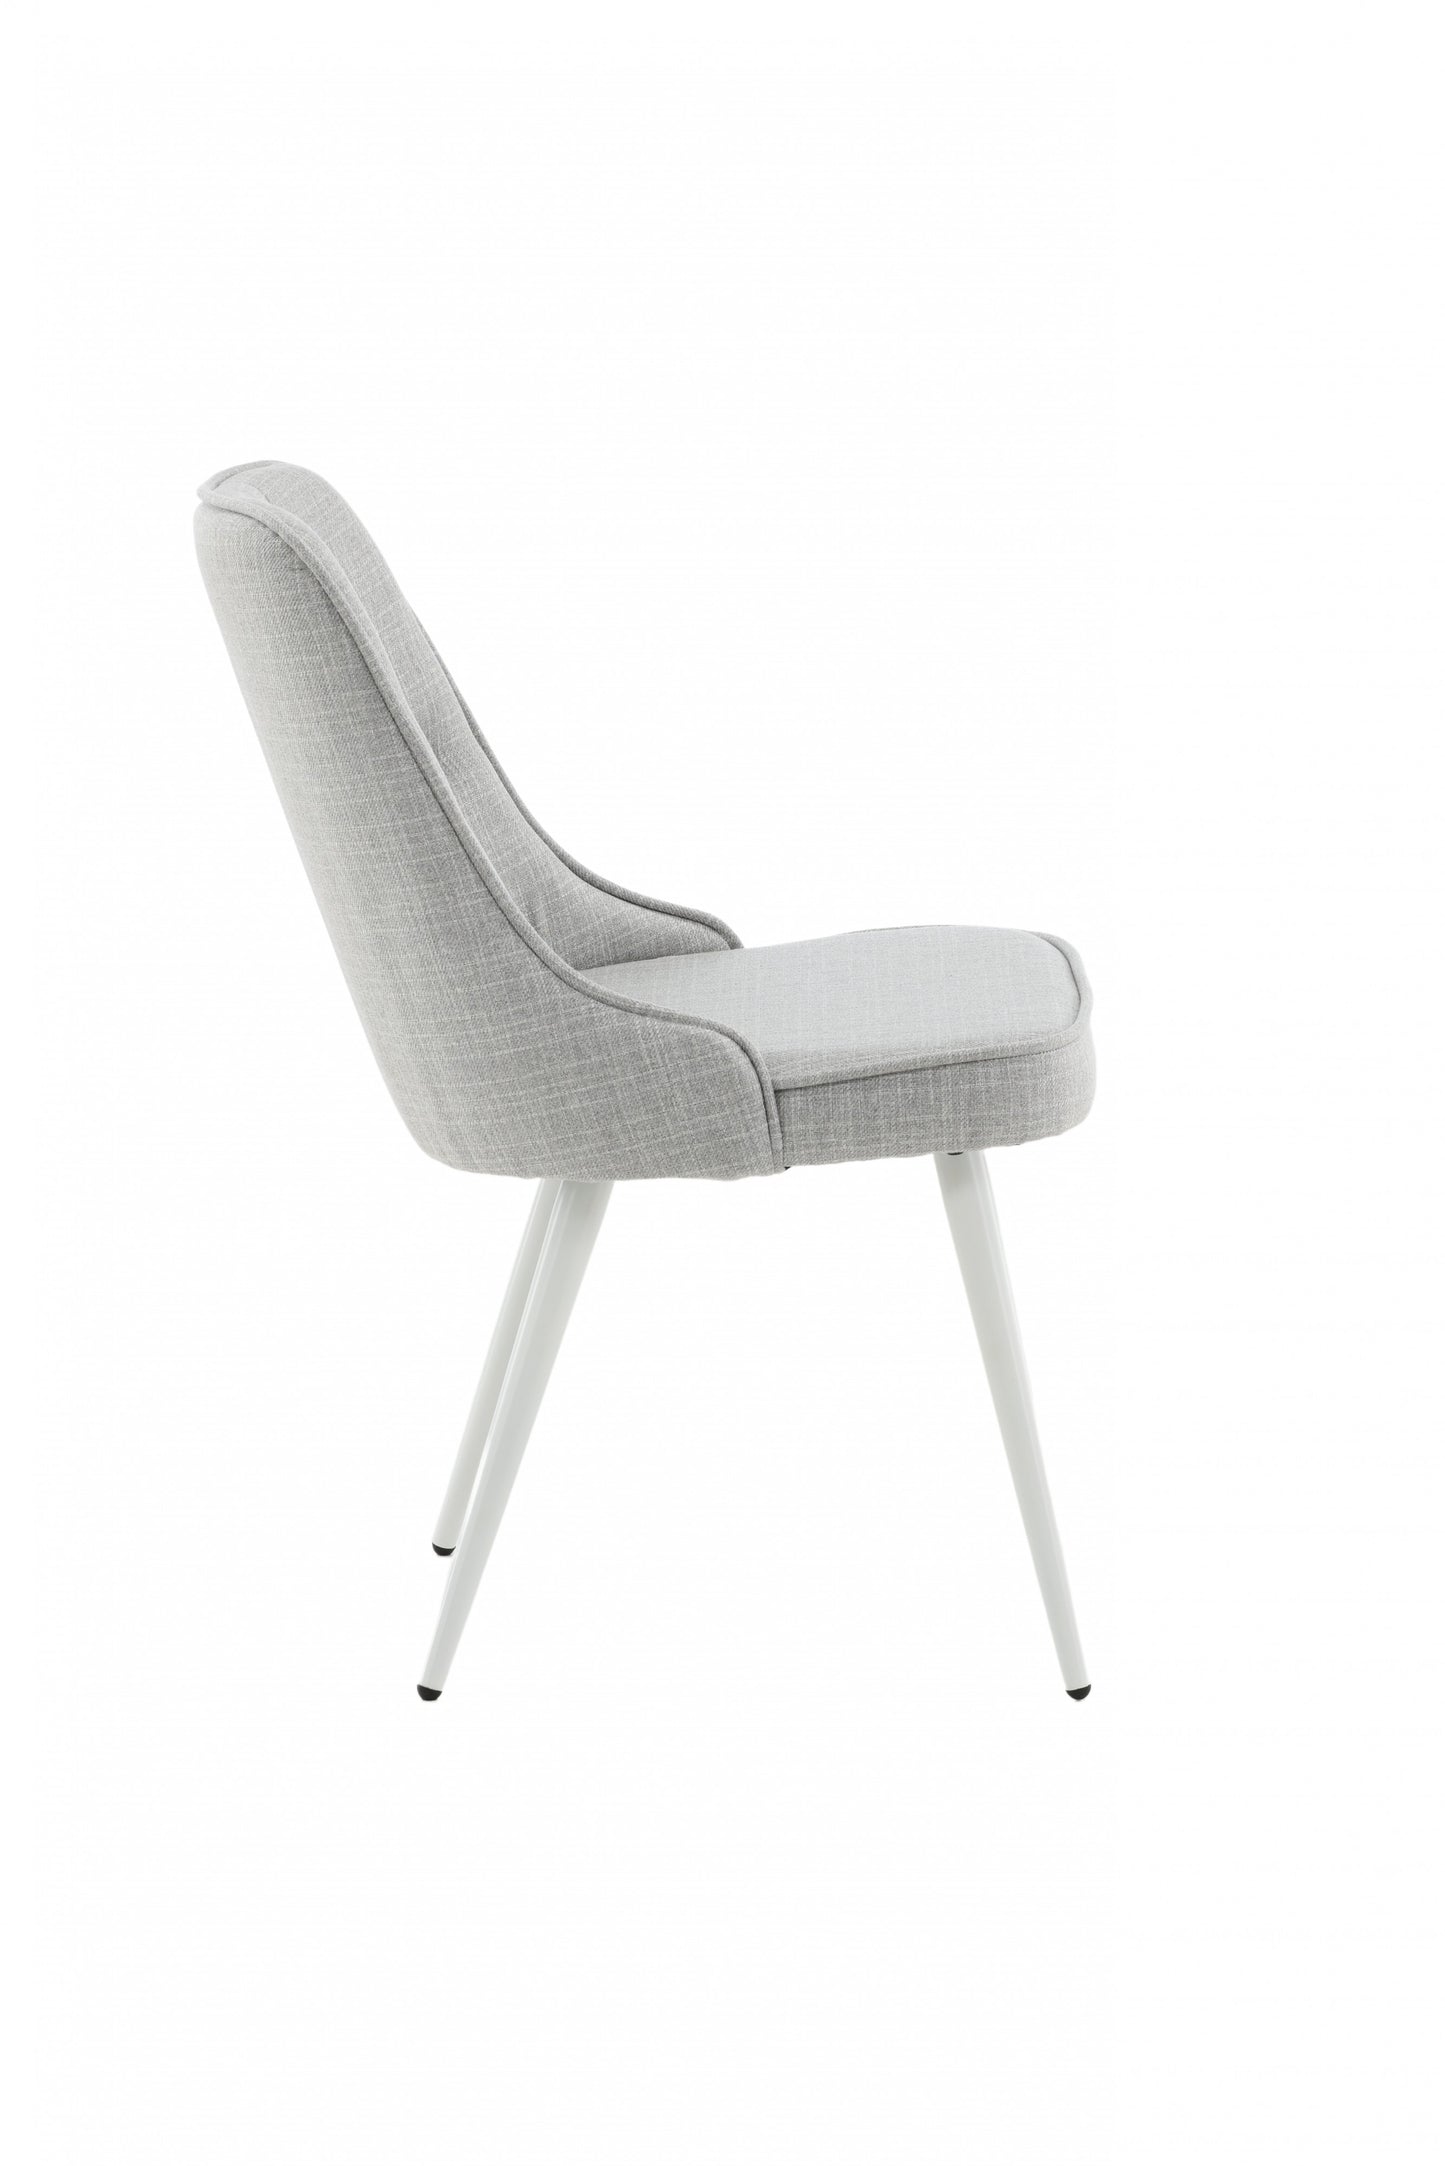 Velour Deluxe Spisebordsstol - Hvide ben - Lysegråt stof